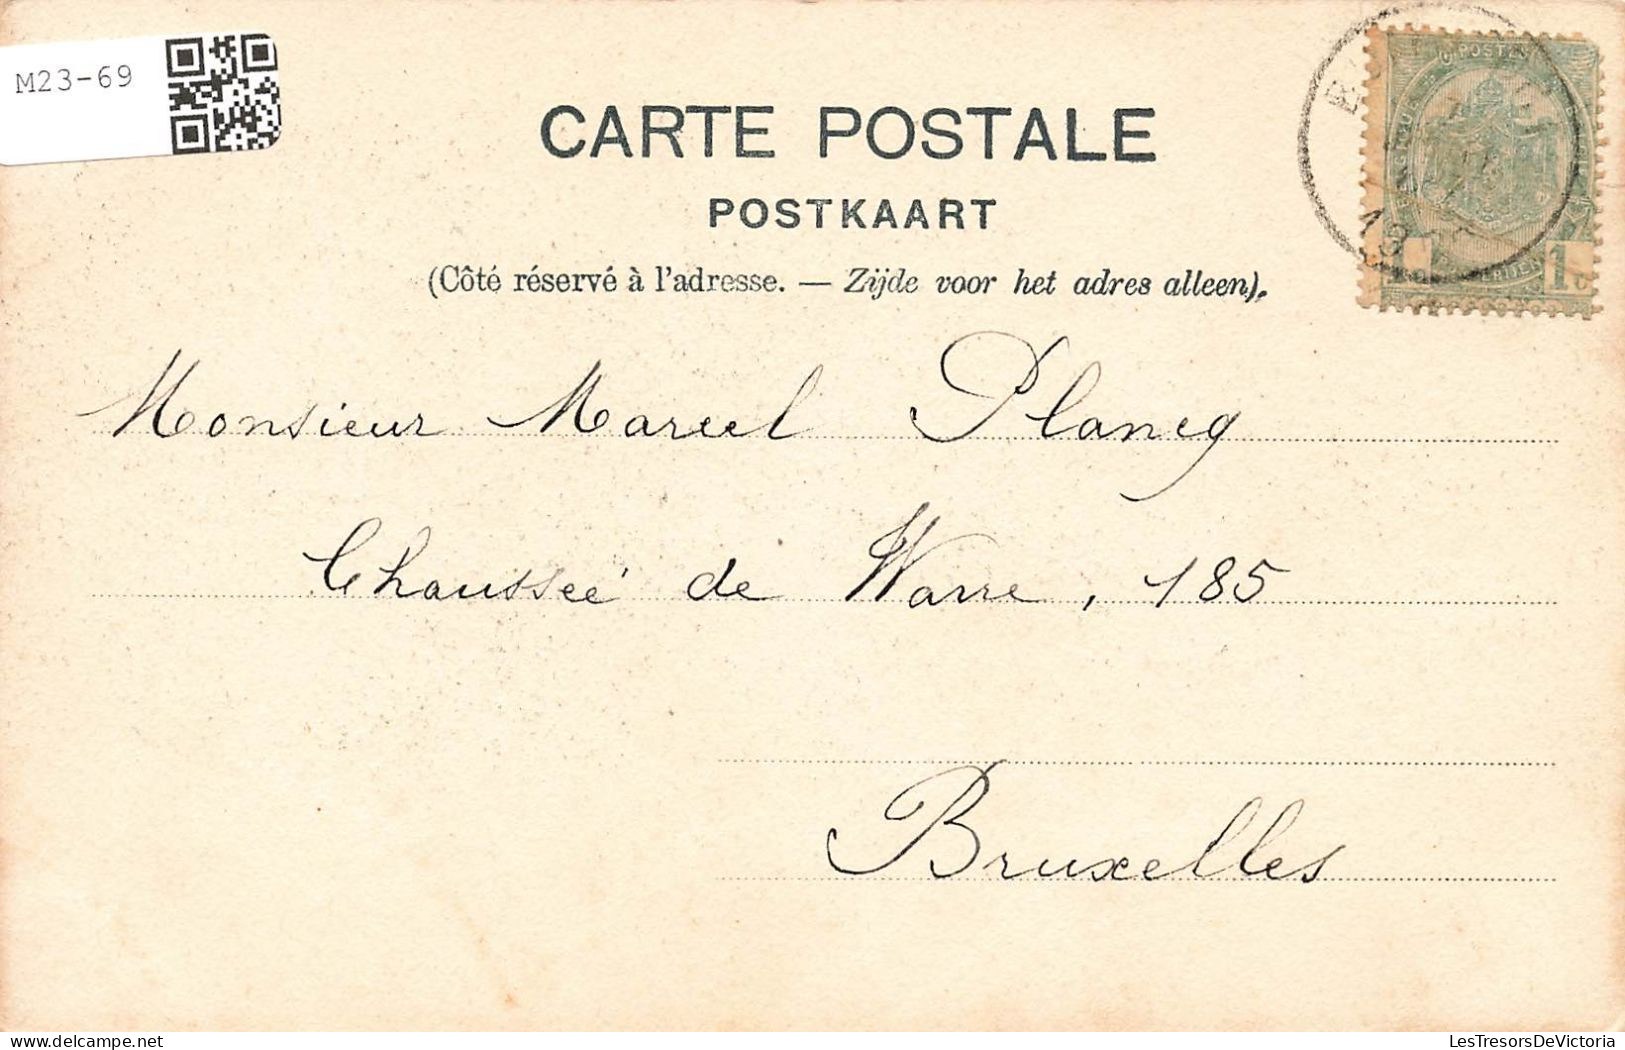 BELGIQUE - Souvenir De Boitsfort - Un Coin De L'Etang - Carte Postale Ancienne - Watermael-Boitsfort - Watermaal-Bosvoorde